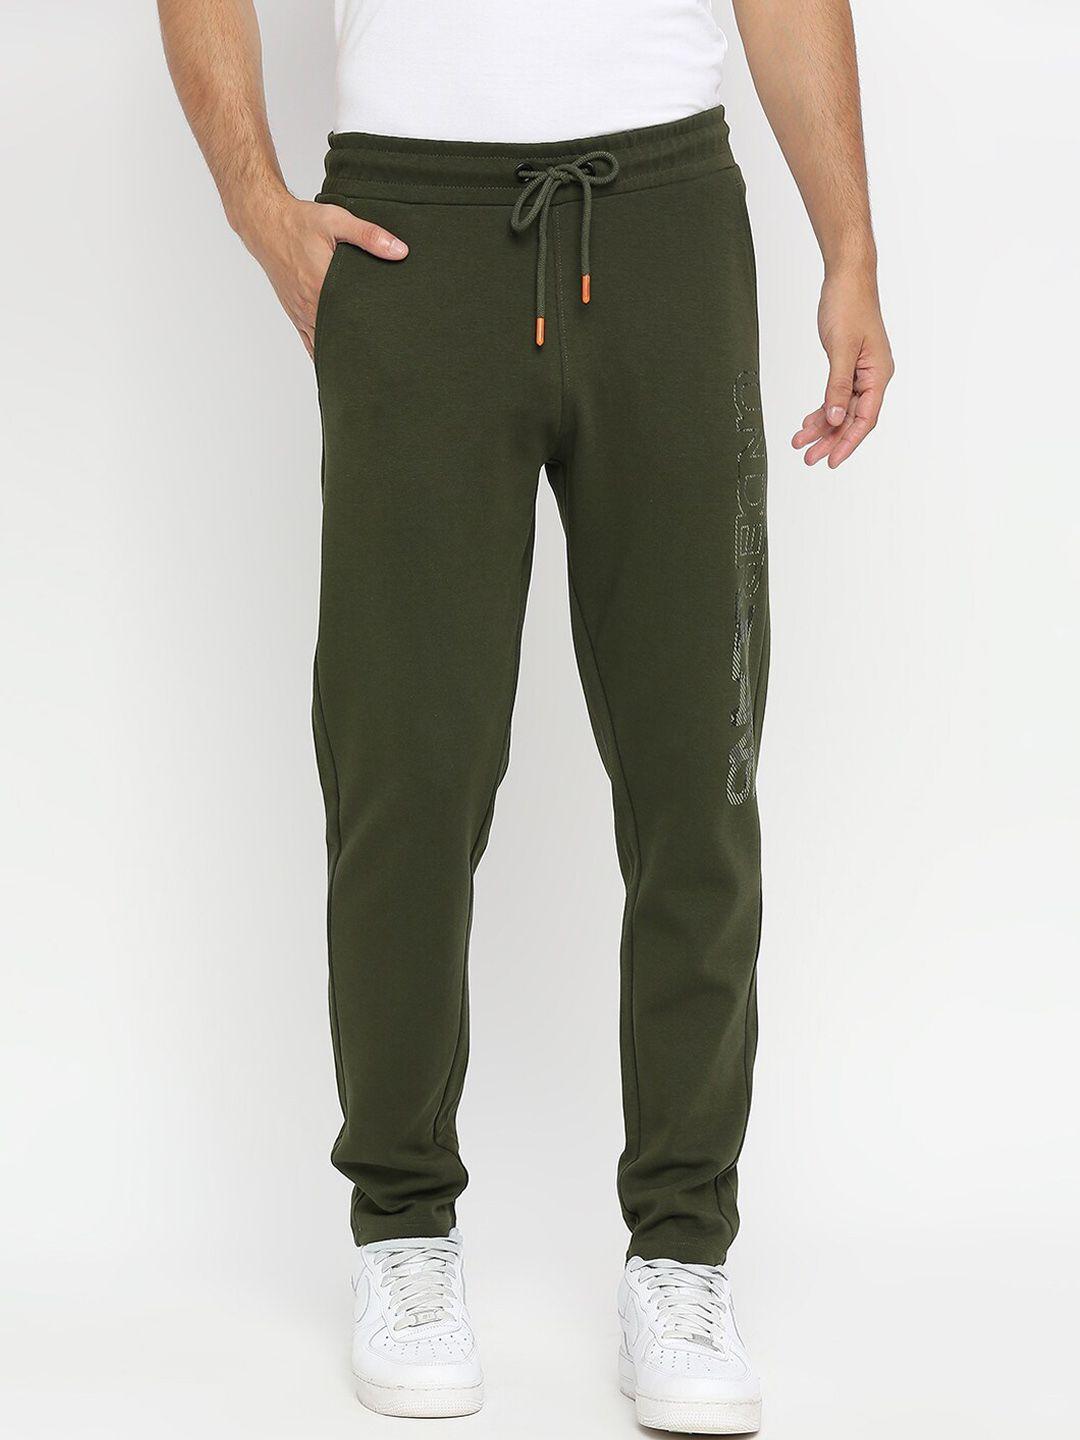 underjeans by spykar men olive green solid track pants